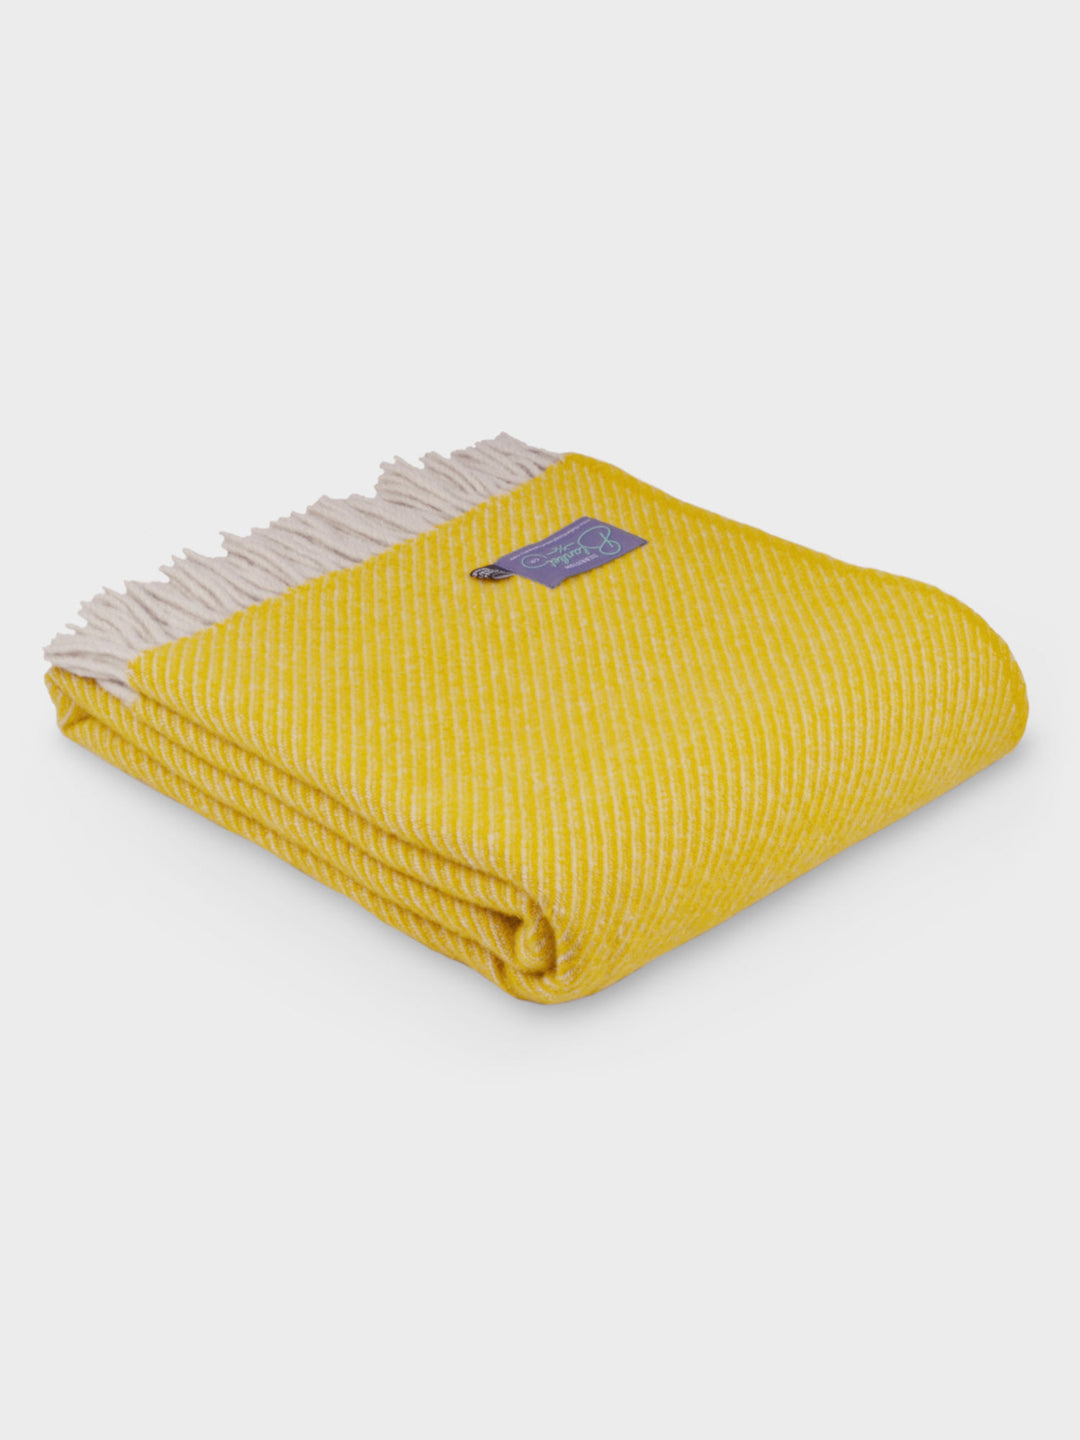 A folded yellow herringbone wool throw by The British Blanket Company.